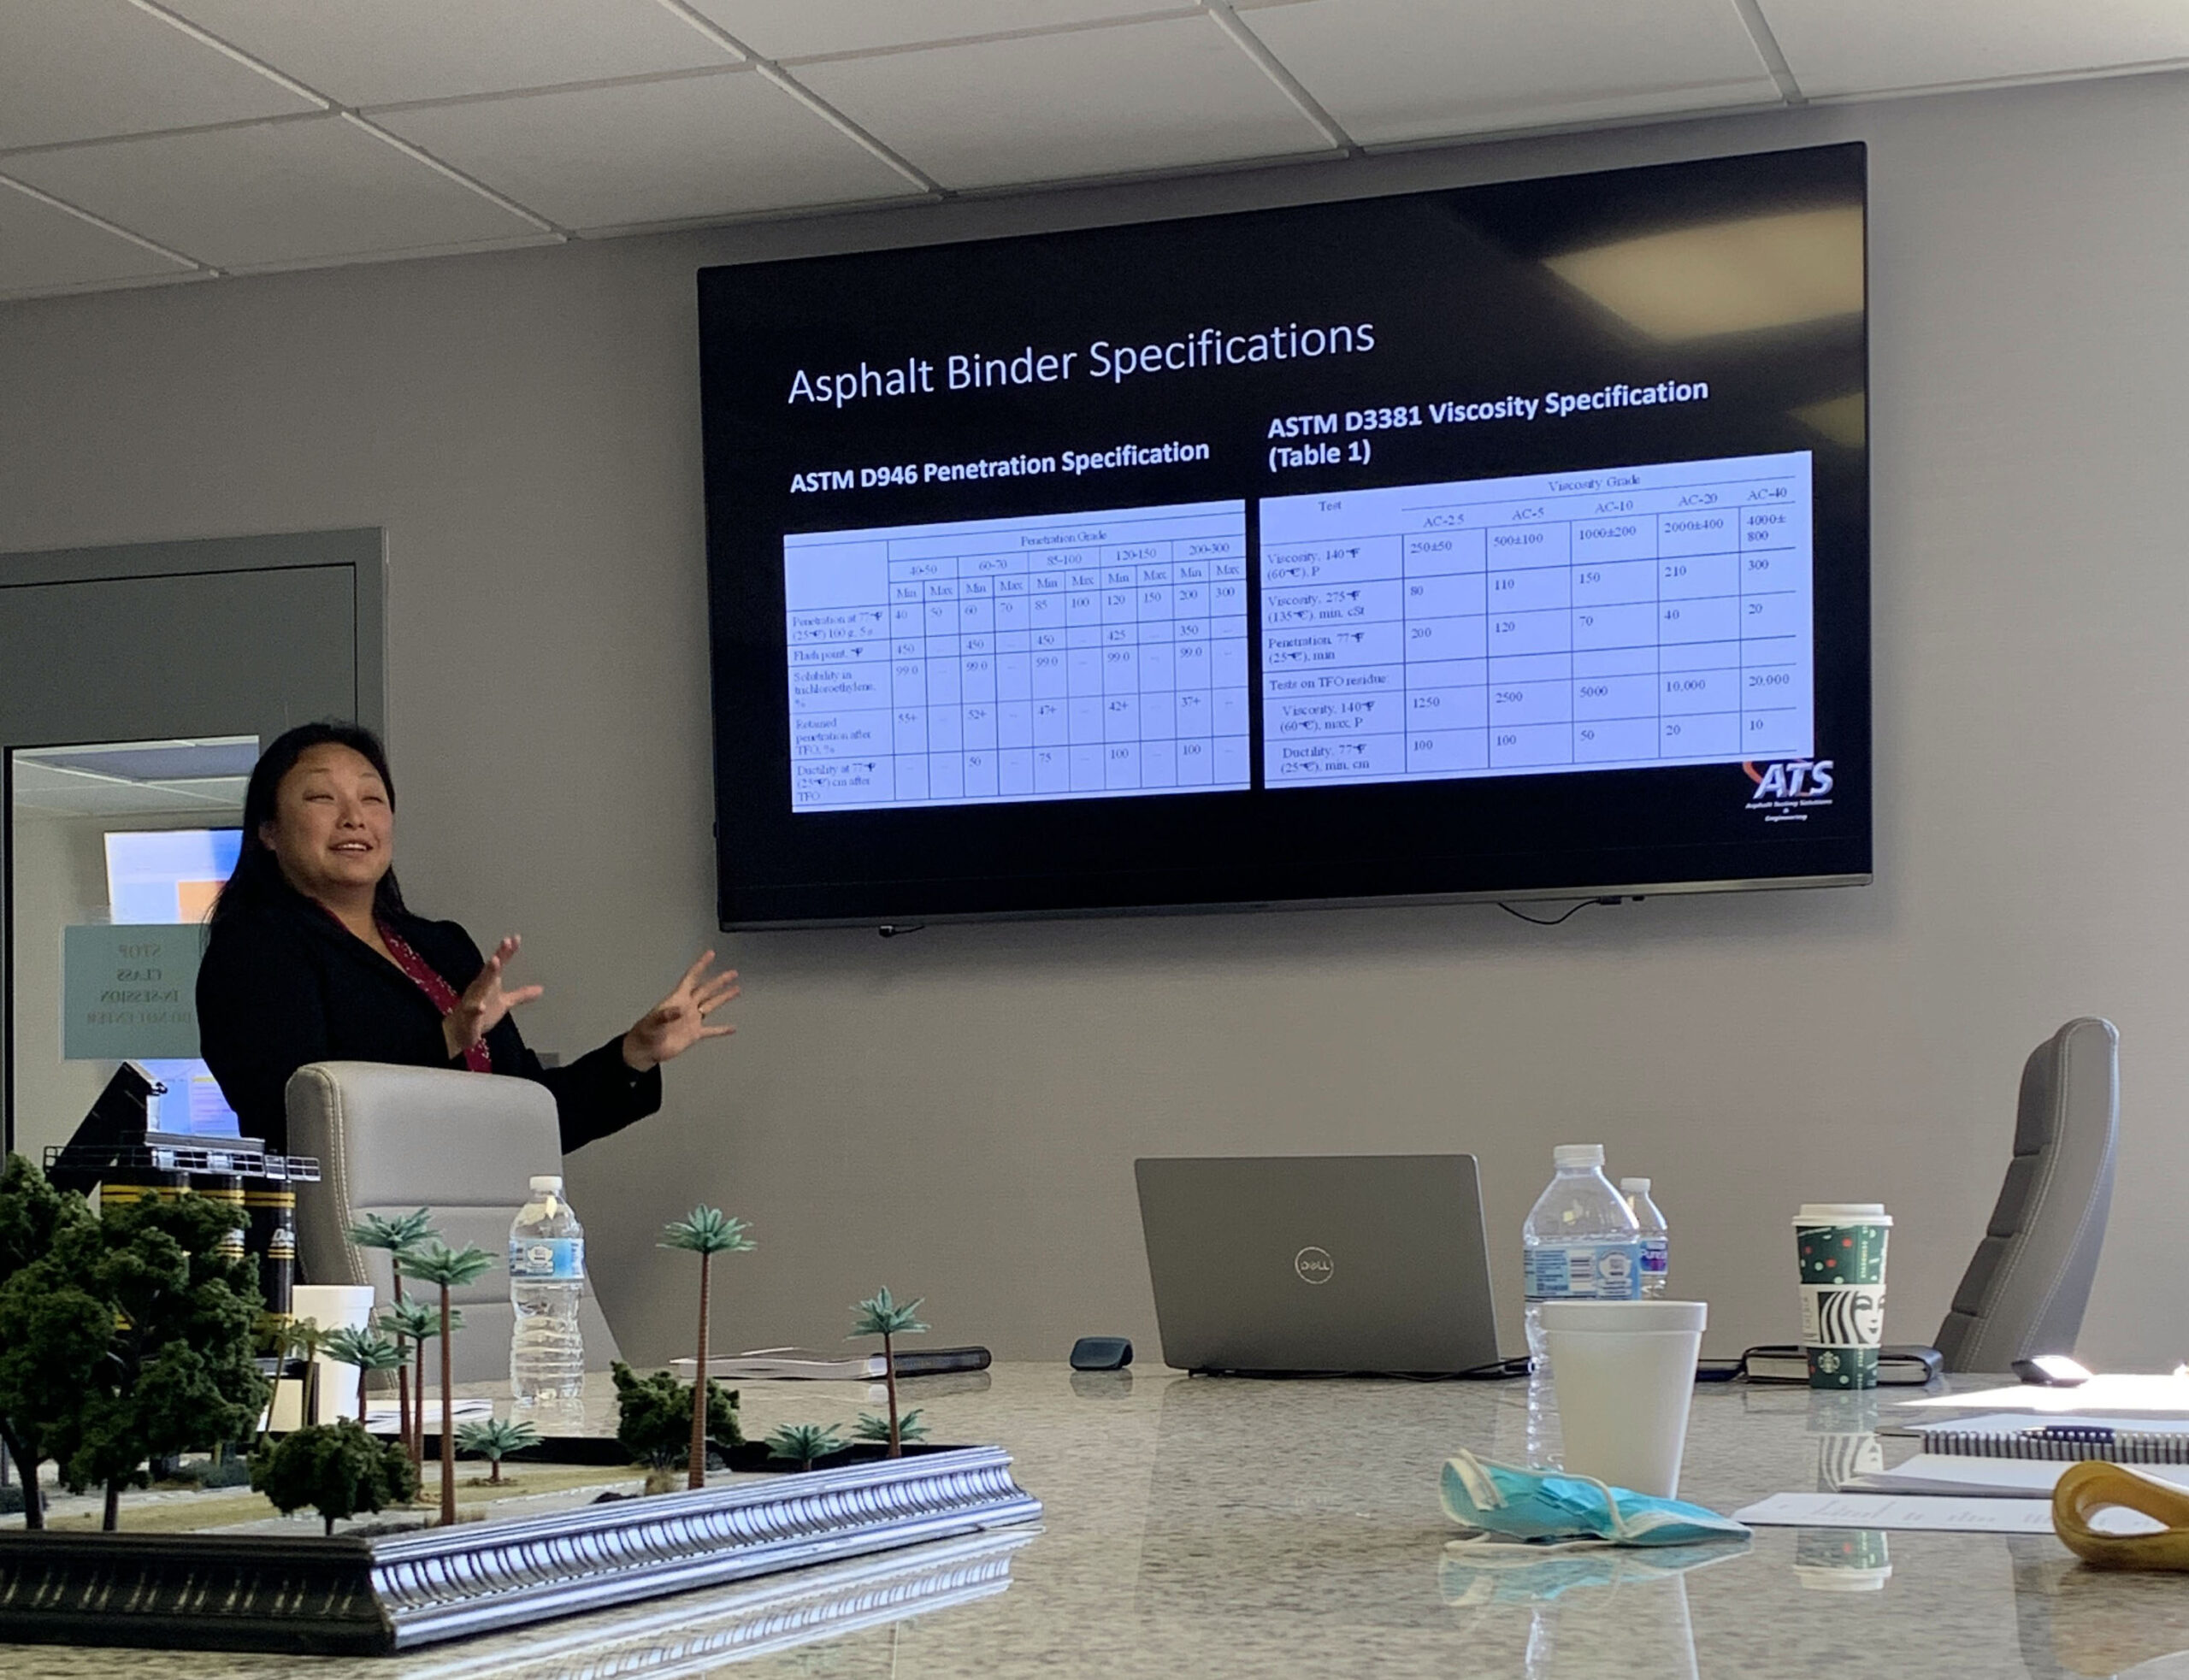 Tanya Nash presenting asphalt binder specification in classroom setting